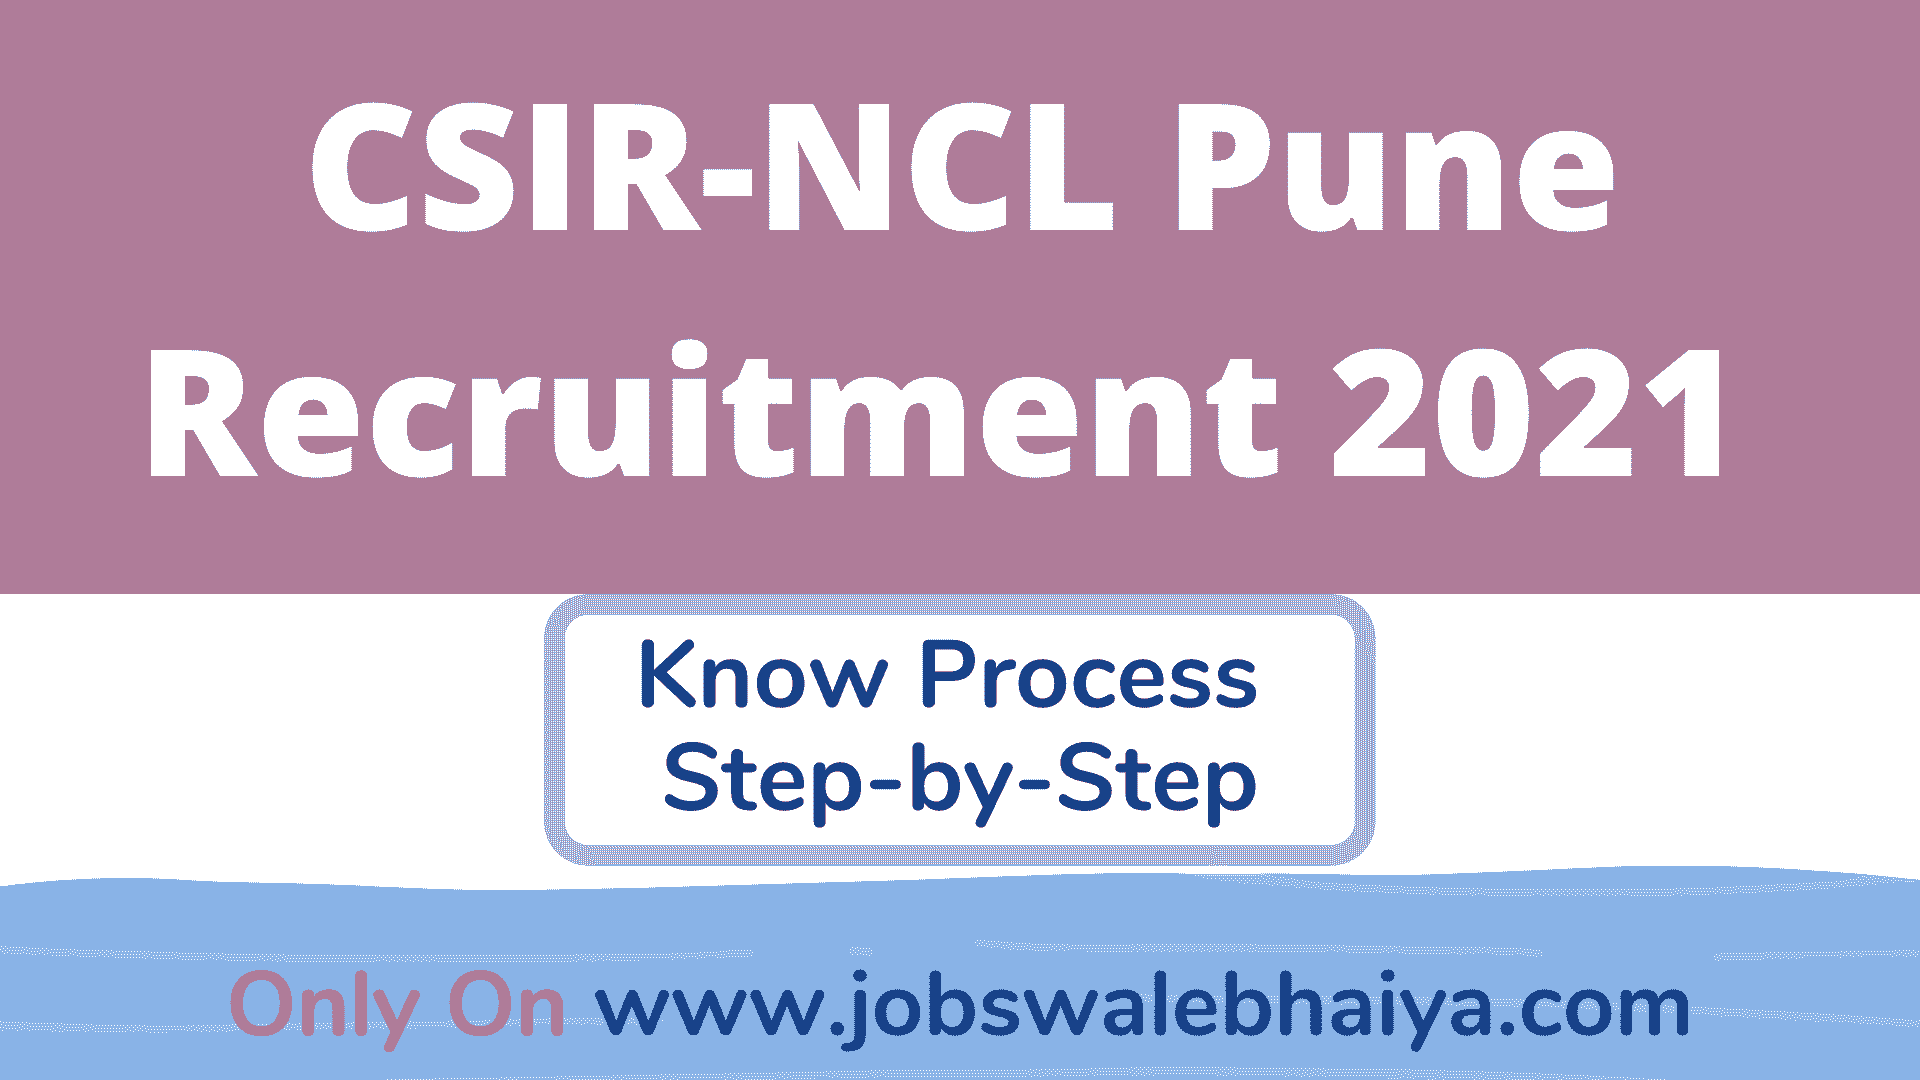 CSIR-National Chemical Laboratory Recruitment 2021 CSIR-NCL Pune Recruitment 2021